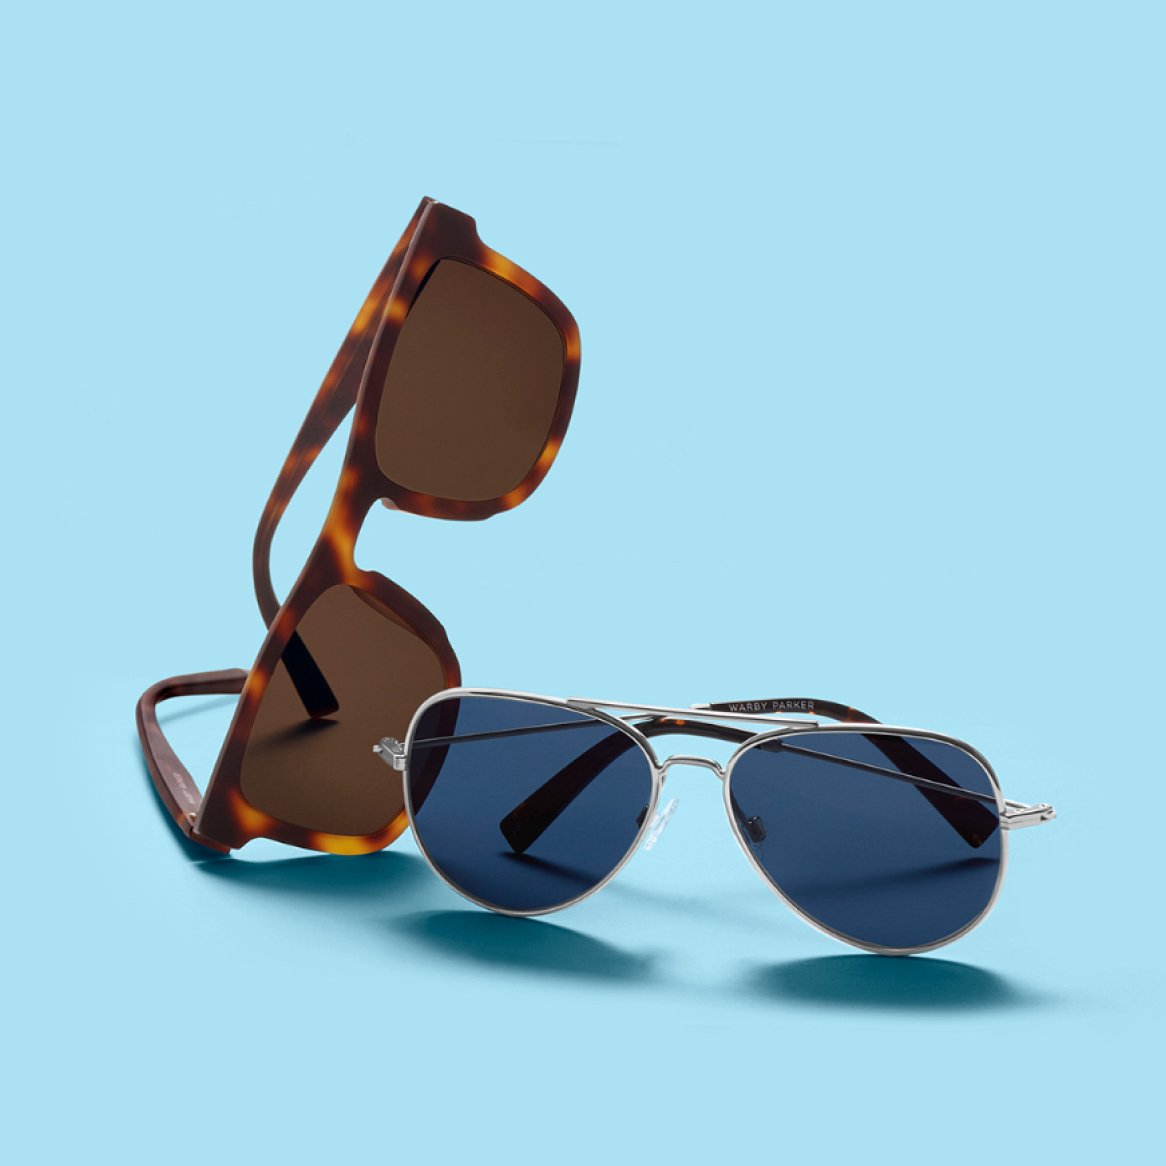 Photochromic Driving Glasses 2 in 1 Polarized Sunglasses Anti-Glare UV 